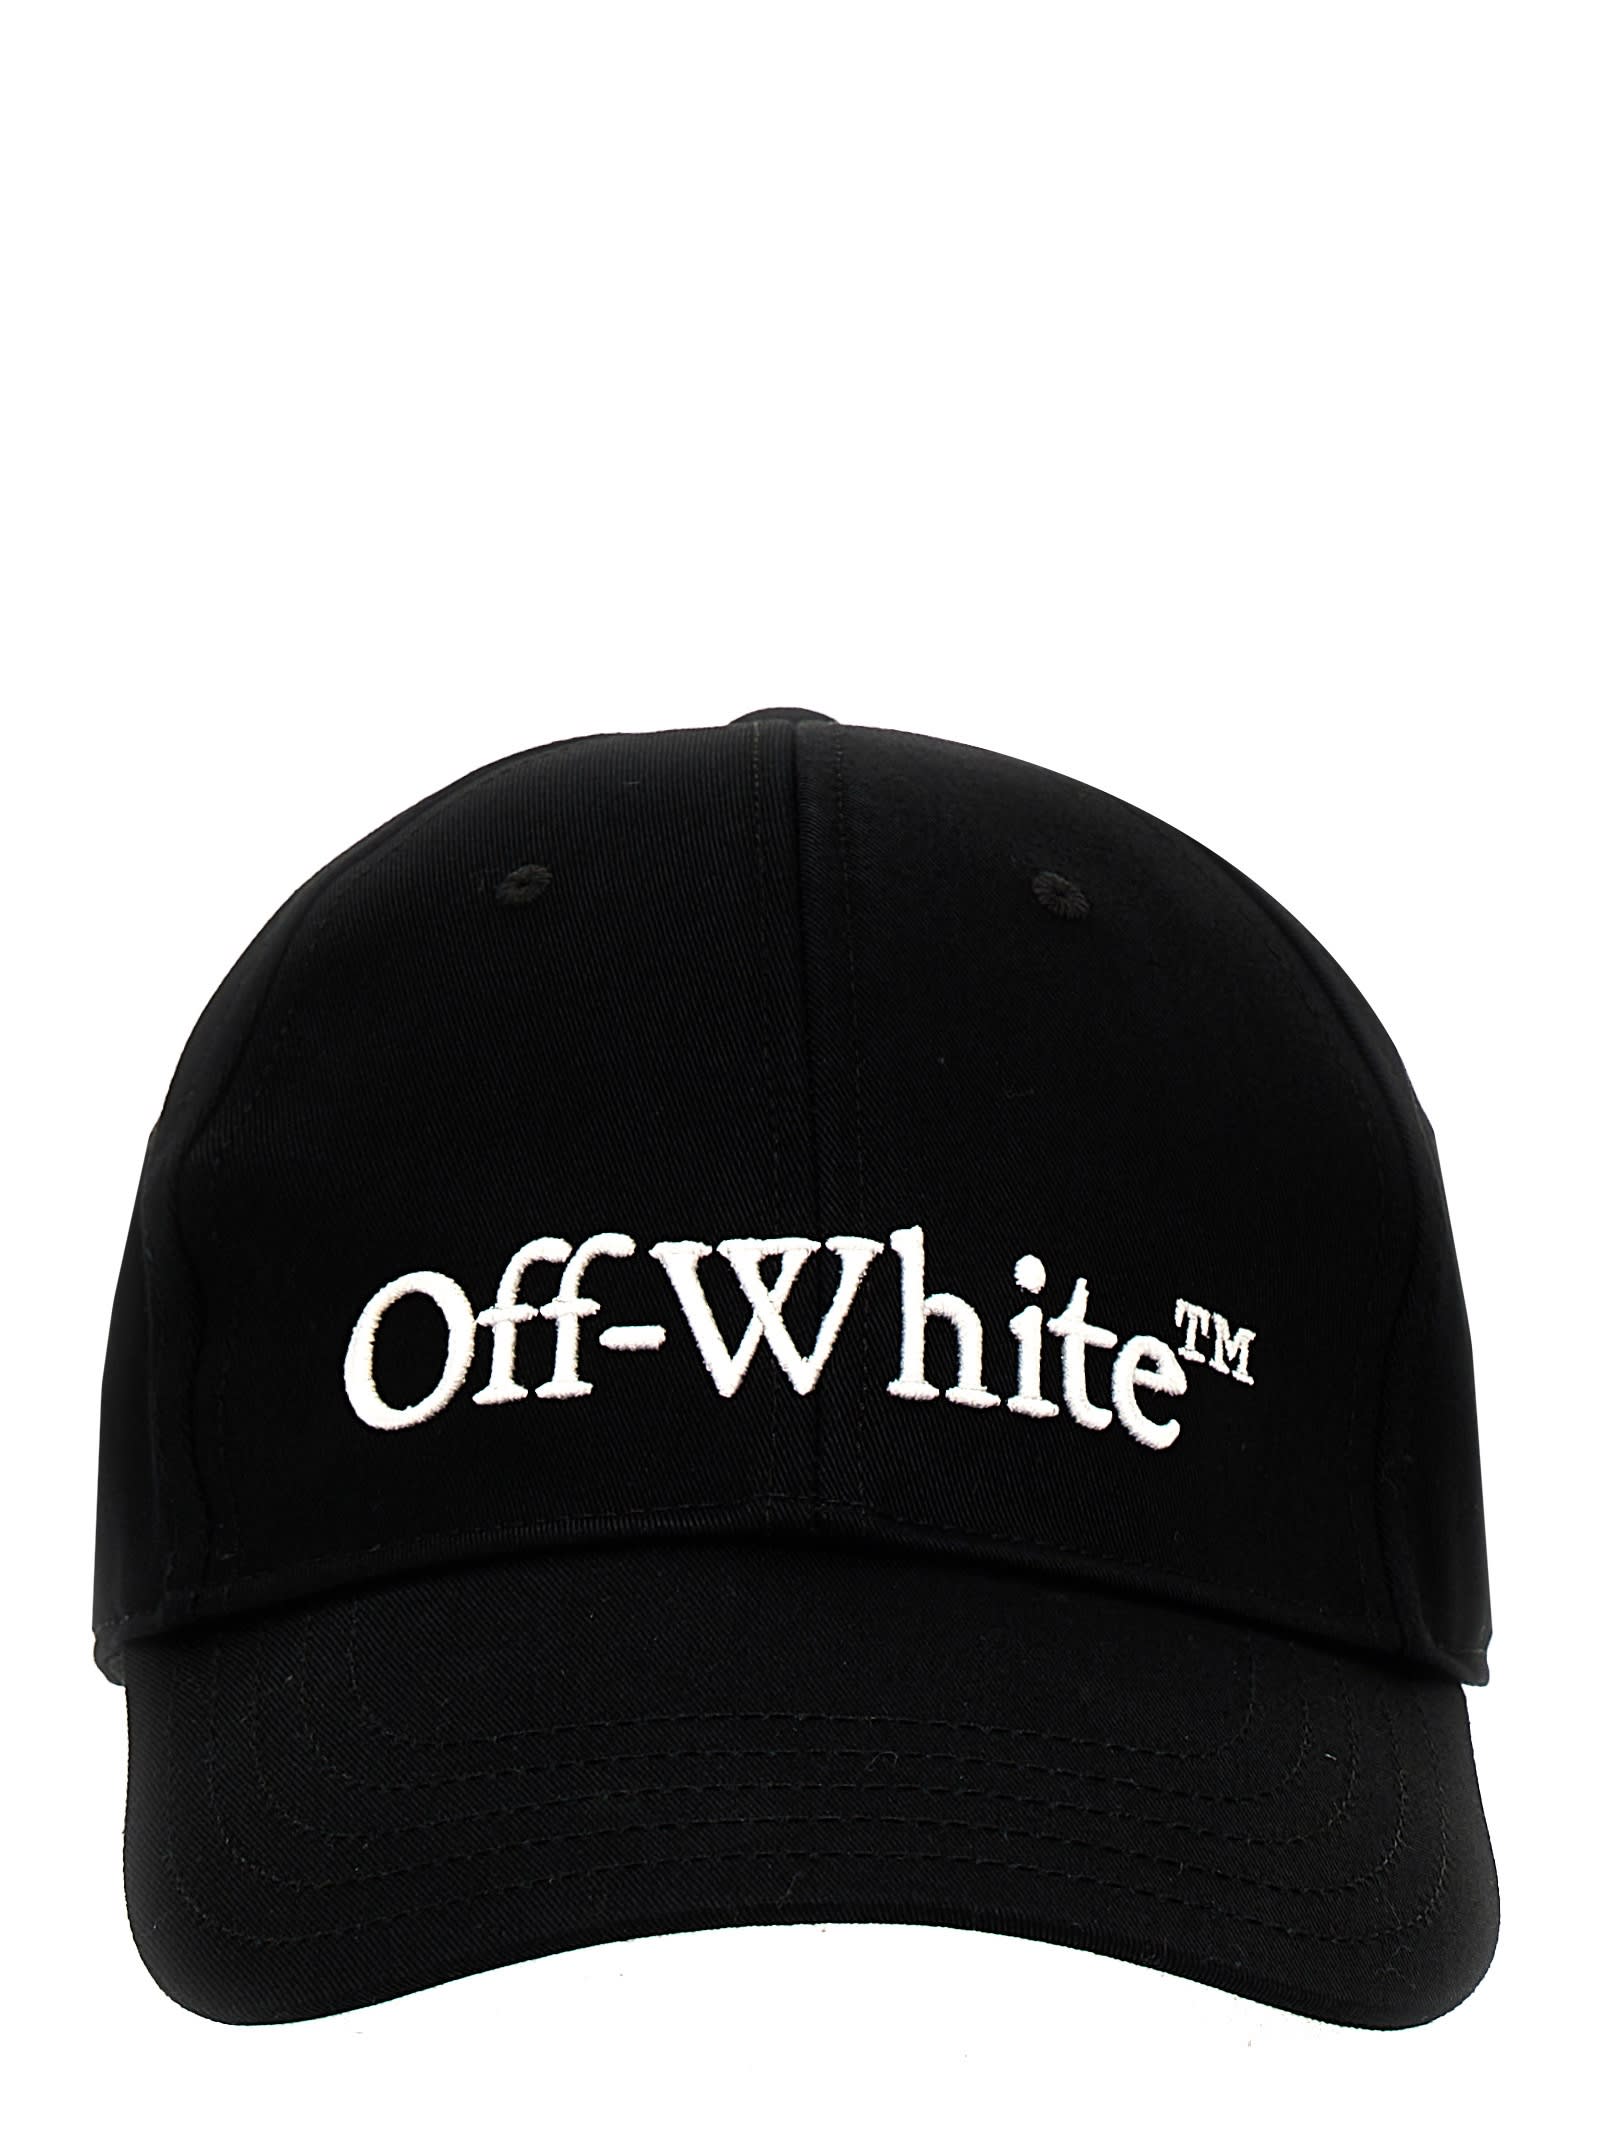 OFF-WHITE LOGO CAP